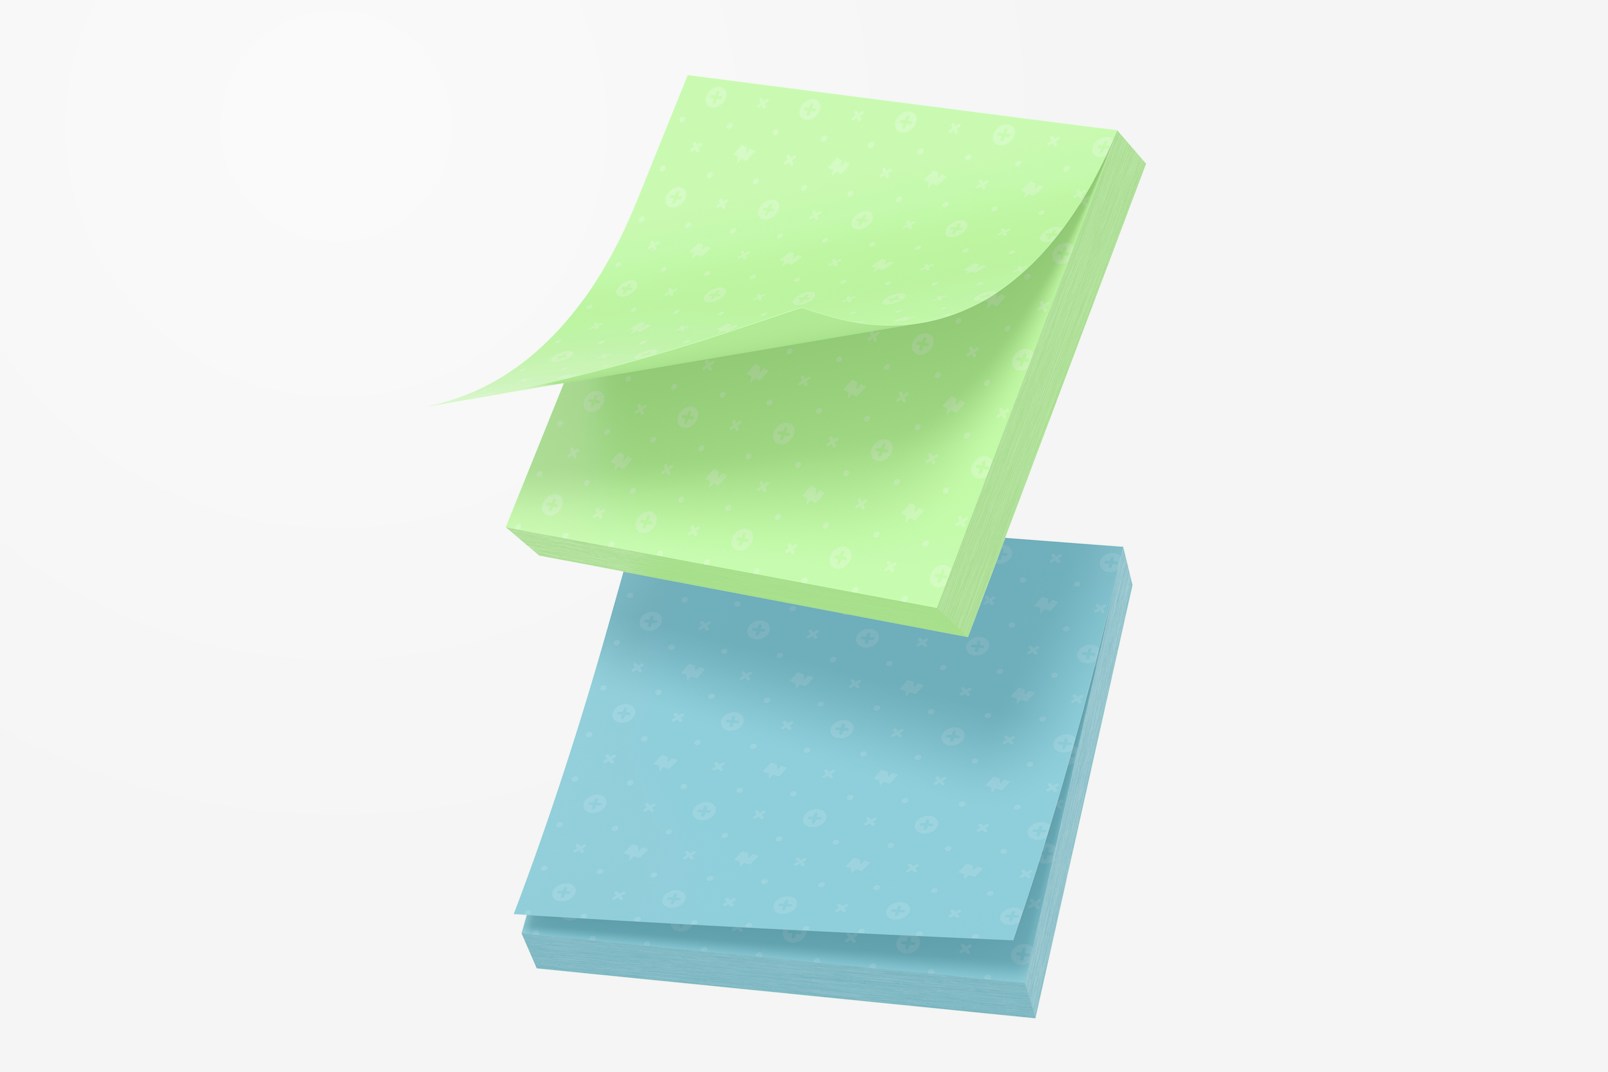 Square Sticky Notes Mockup, Floating